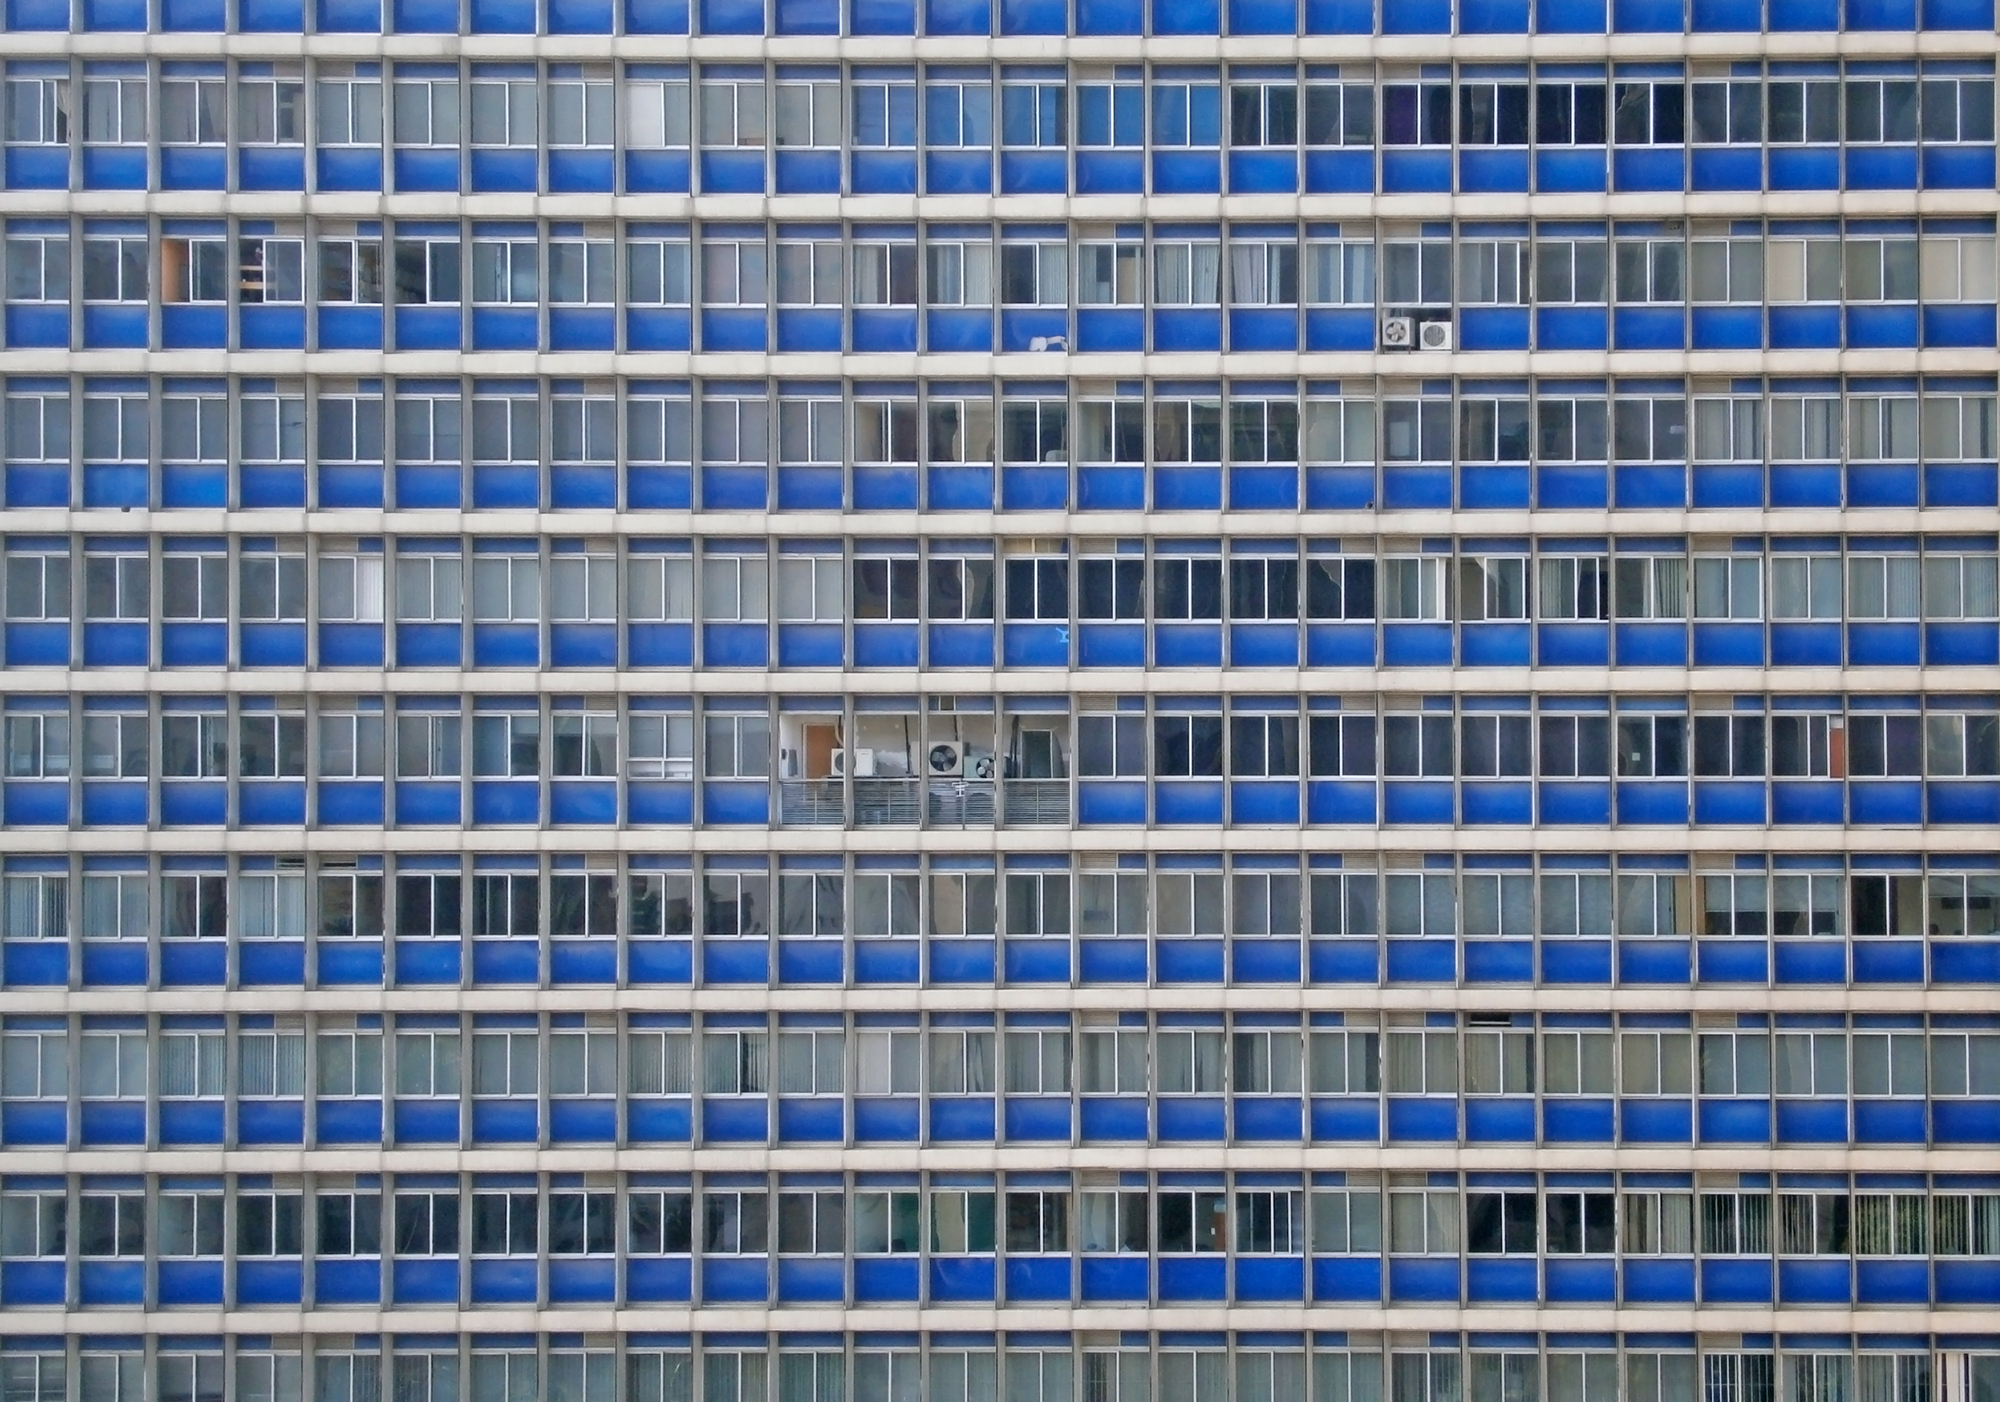 File:Windows in Caracas Building.jpg - Wikimedia Commons